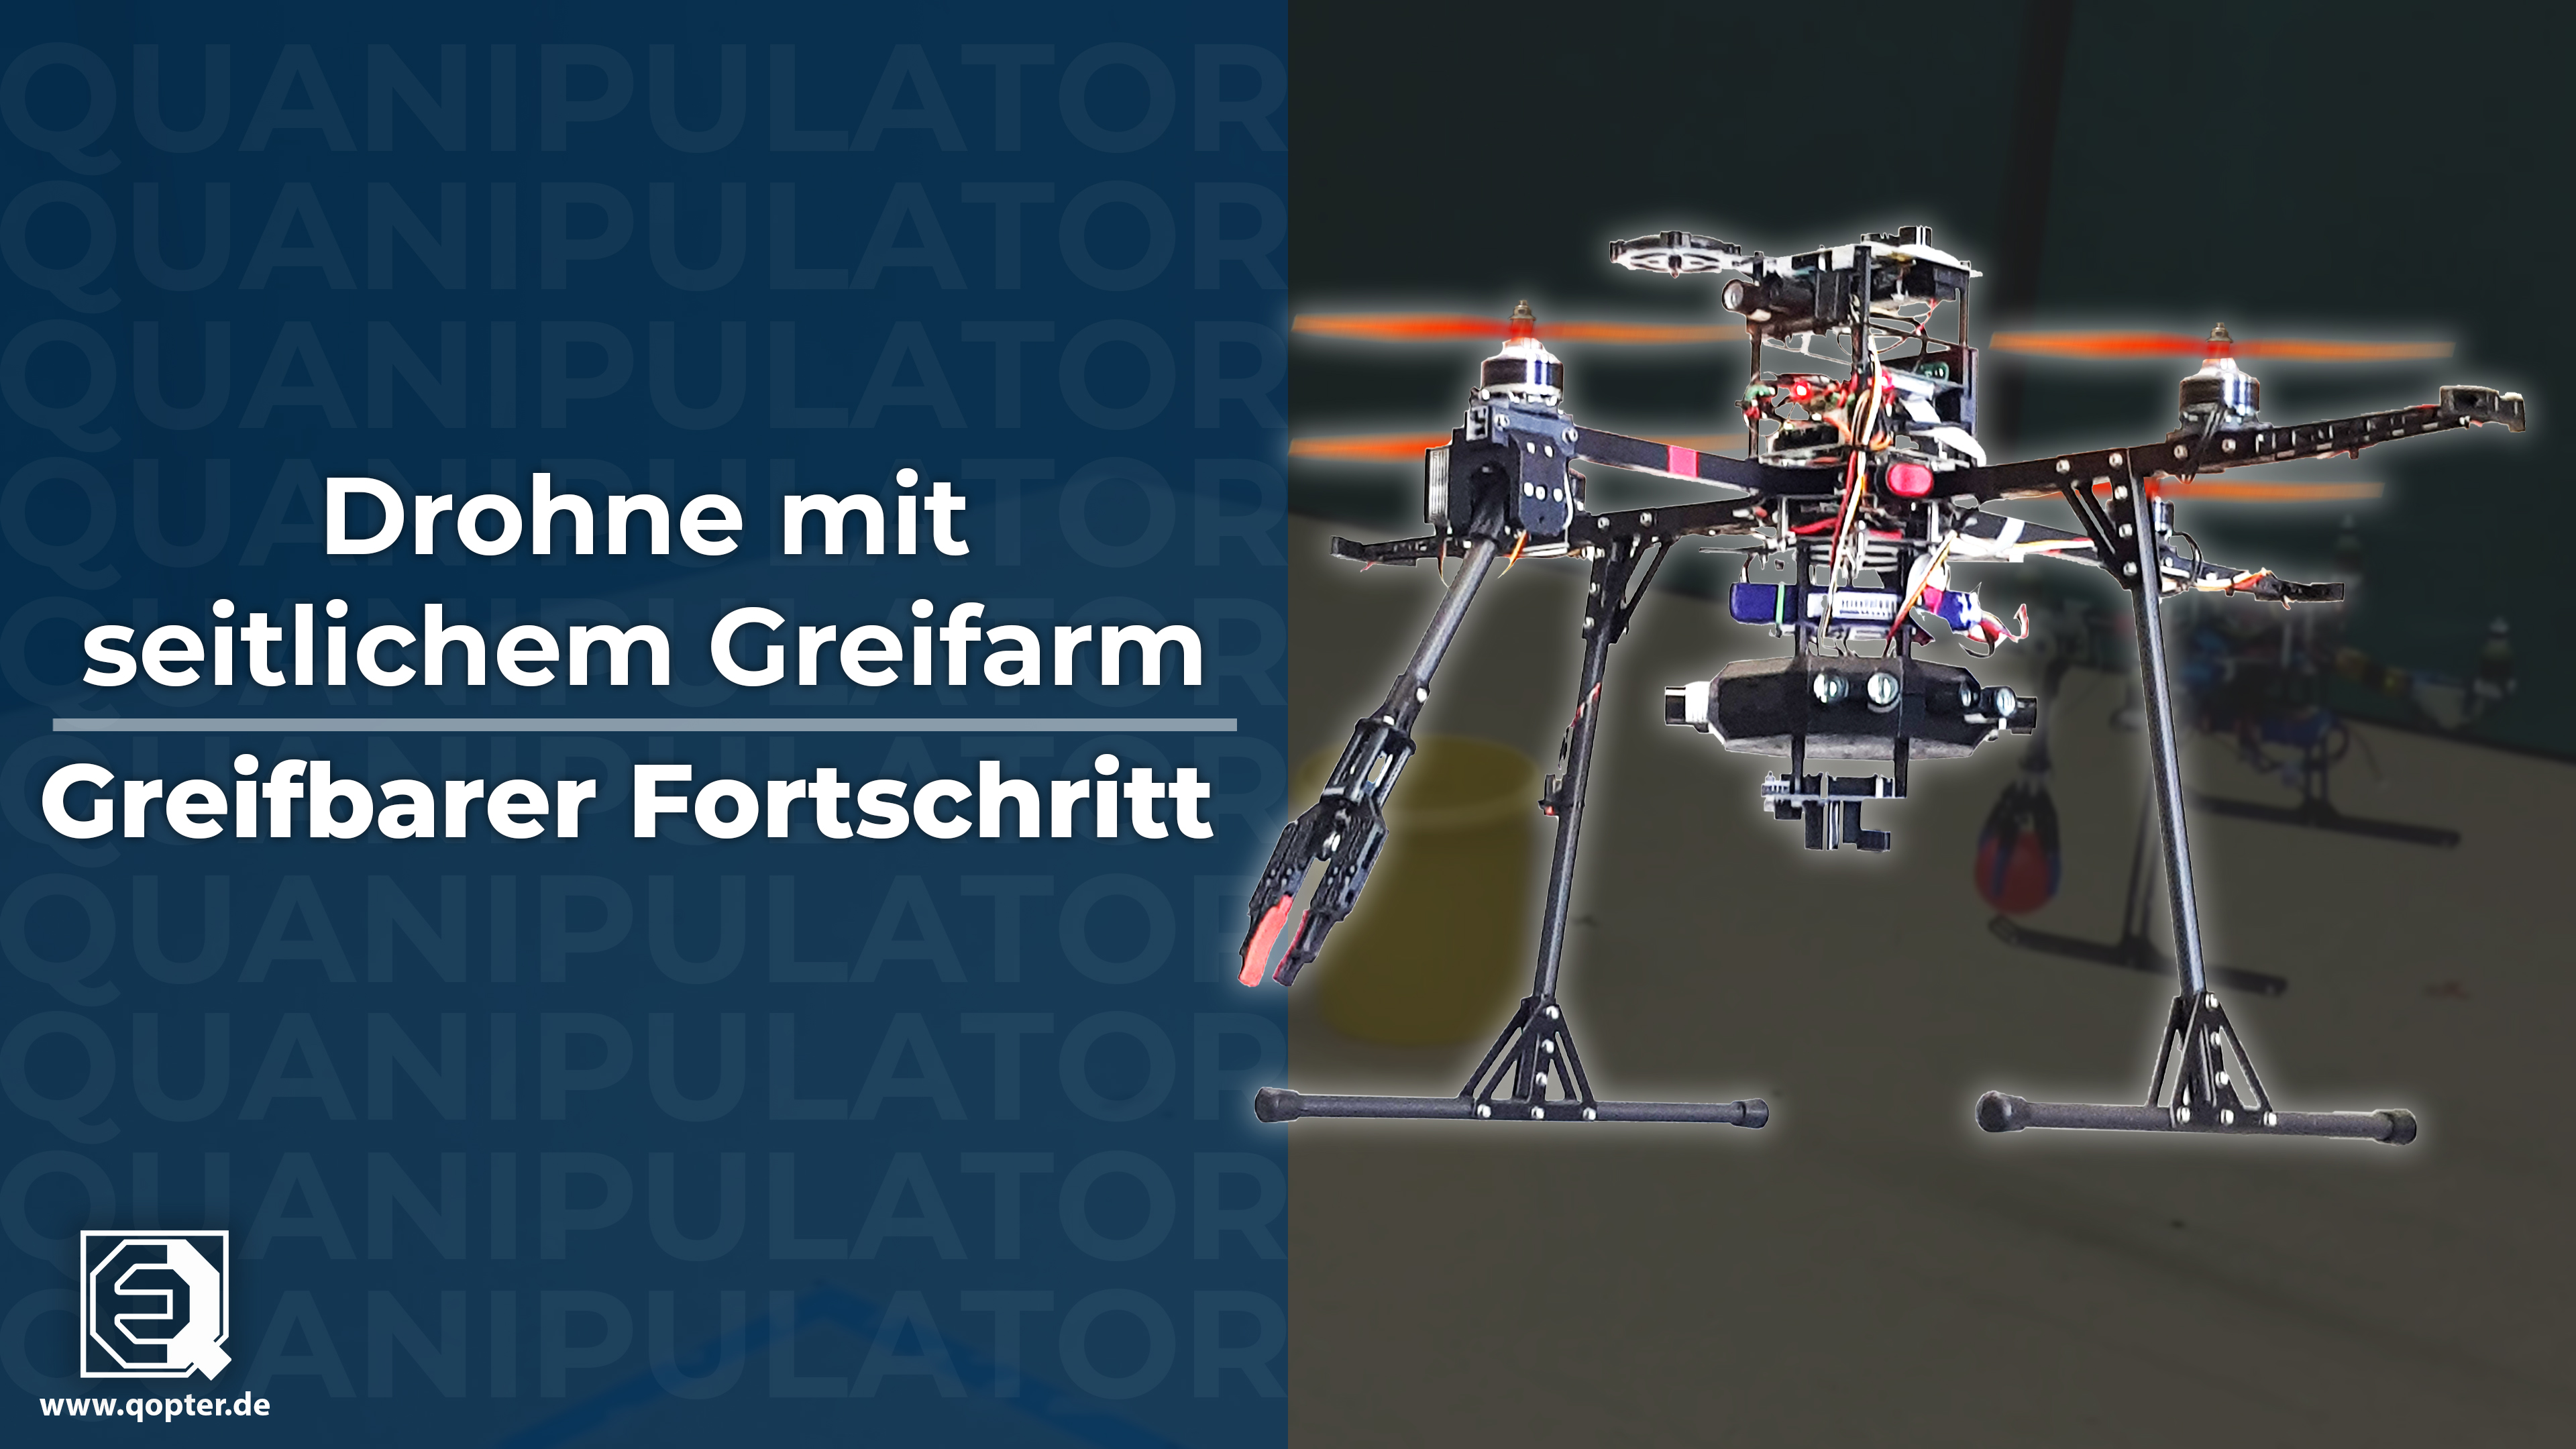 Quanipulator – Drohne mit seitlichem Greifarm